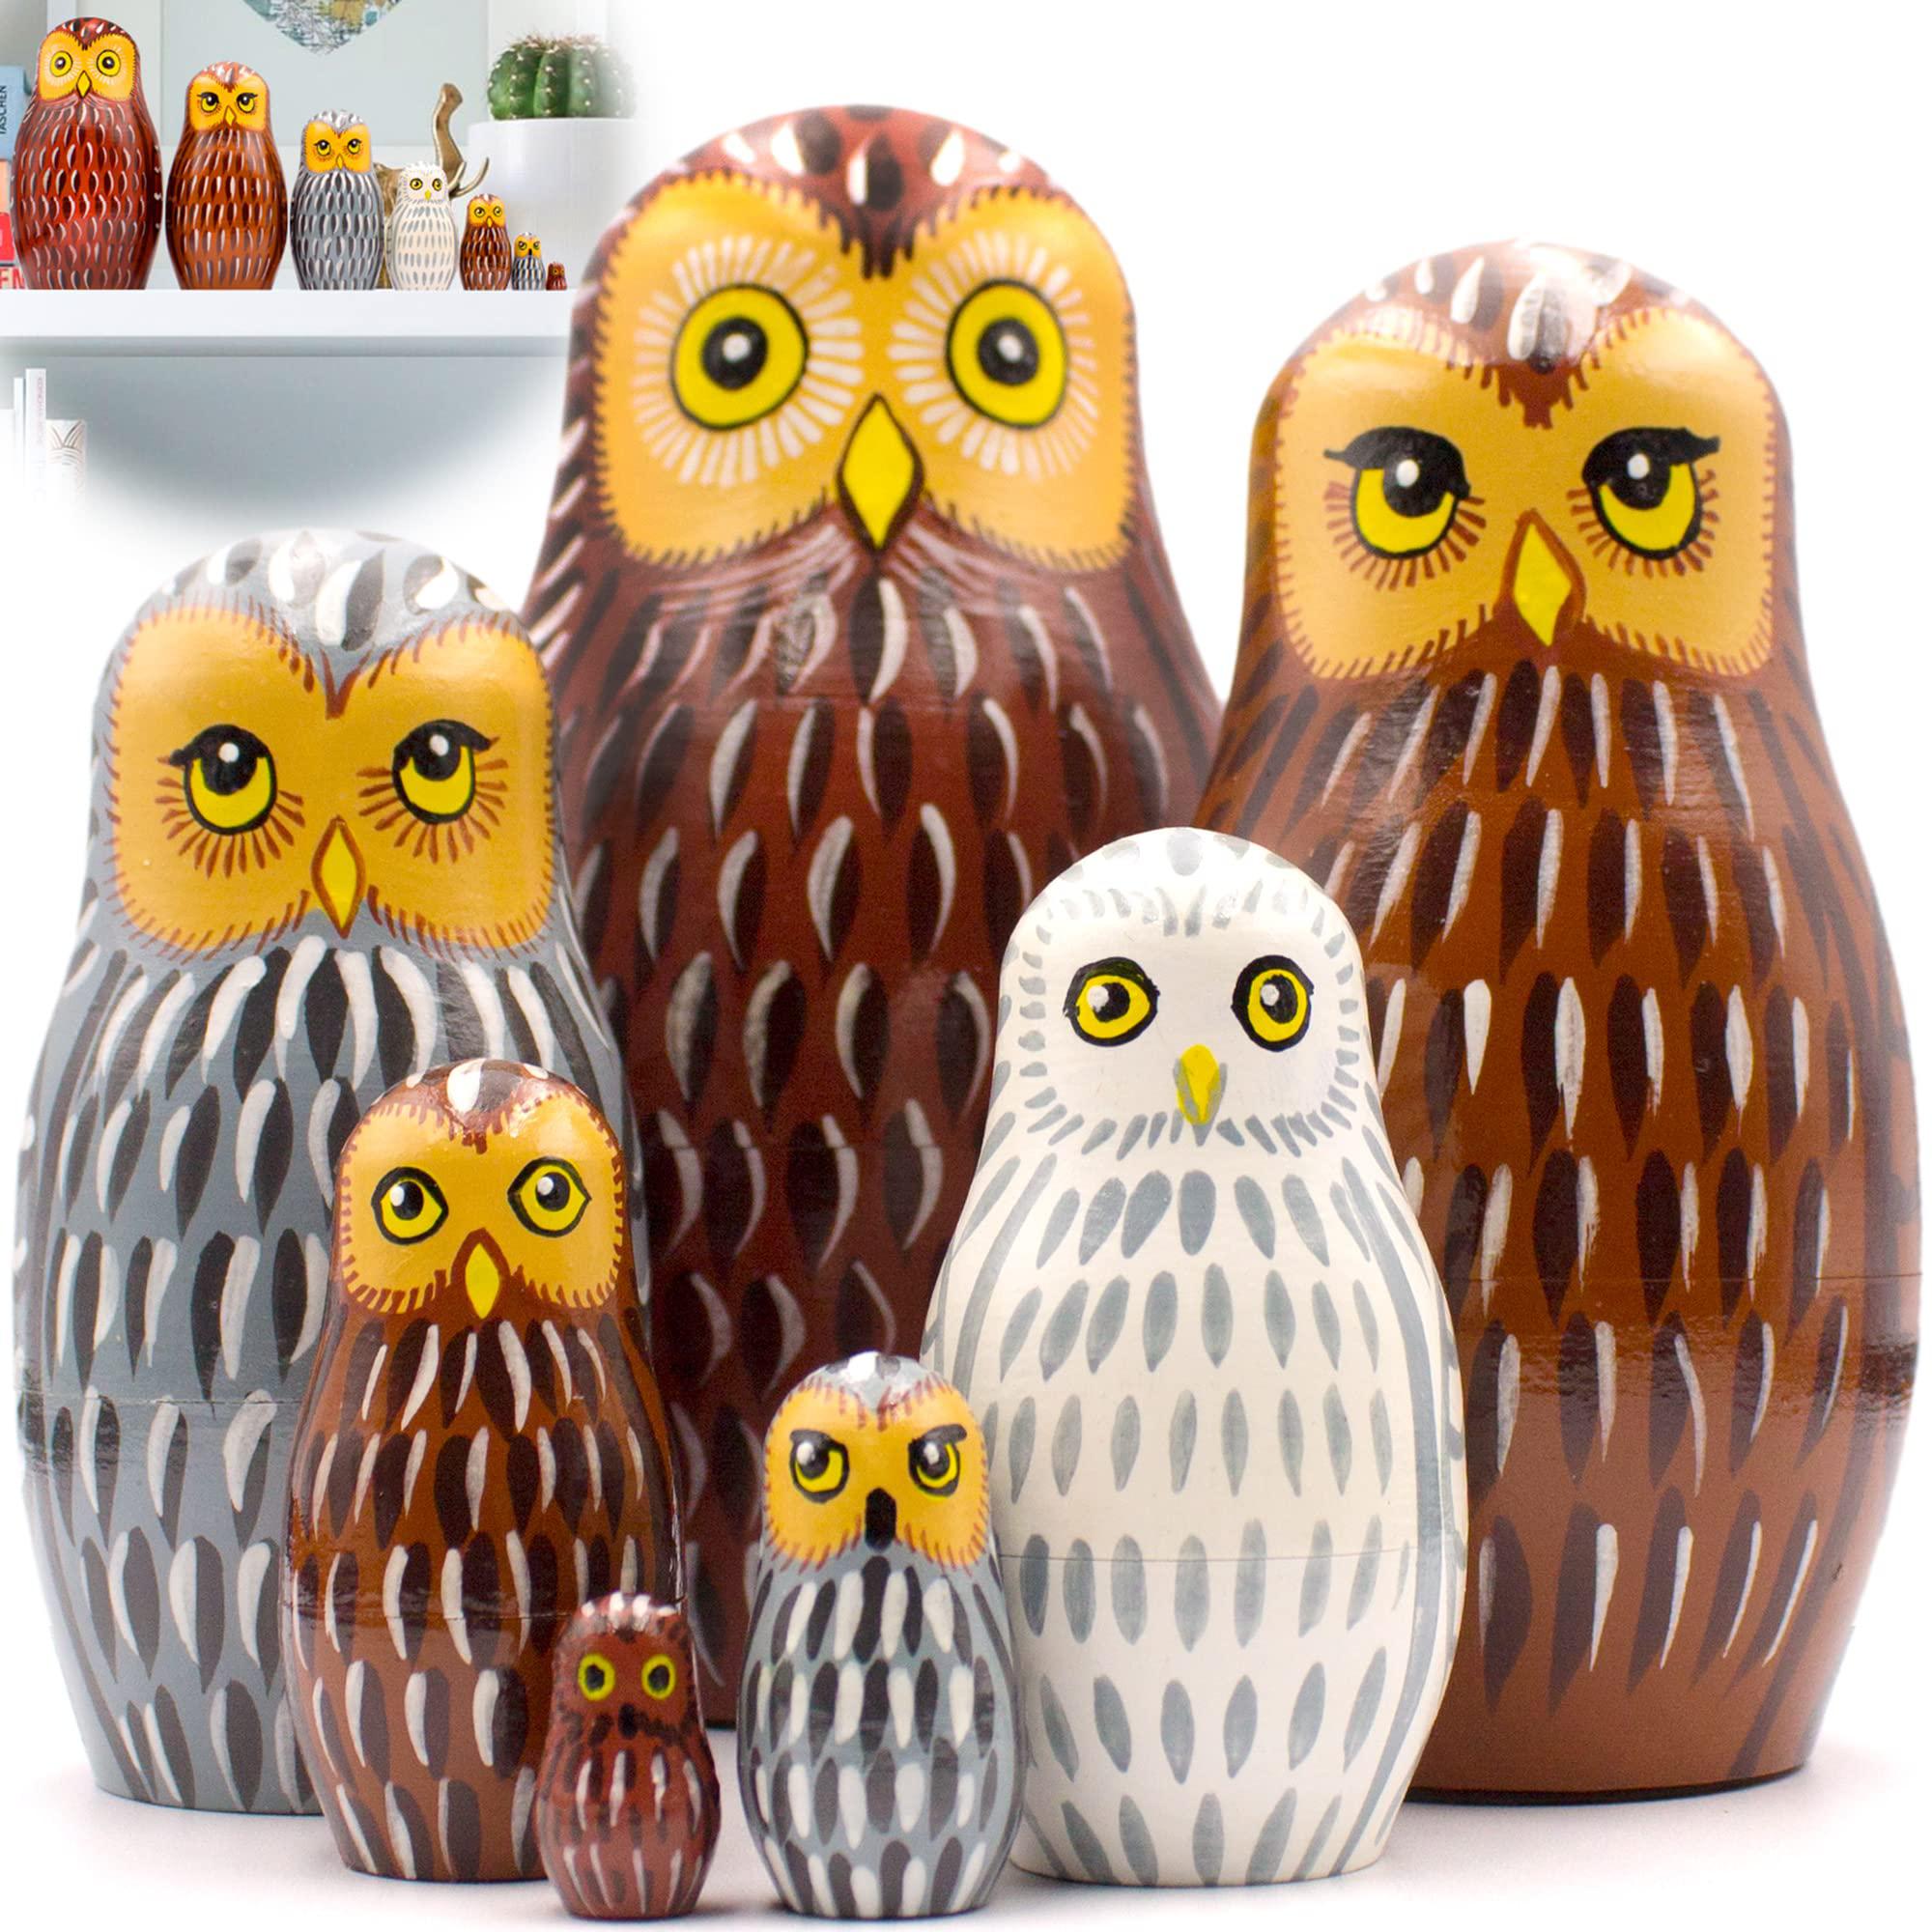 AEVVV owl nesting dolls set of 7 pcs - matryoshka with owl figurines - nesting owl dolls - owl gifts for owl lovers - owl decoratio